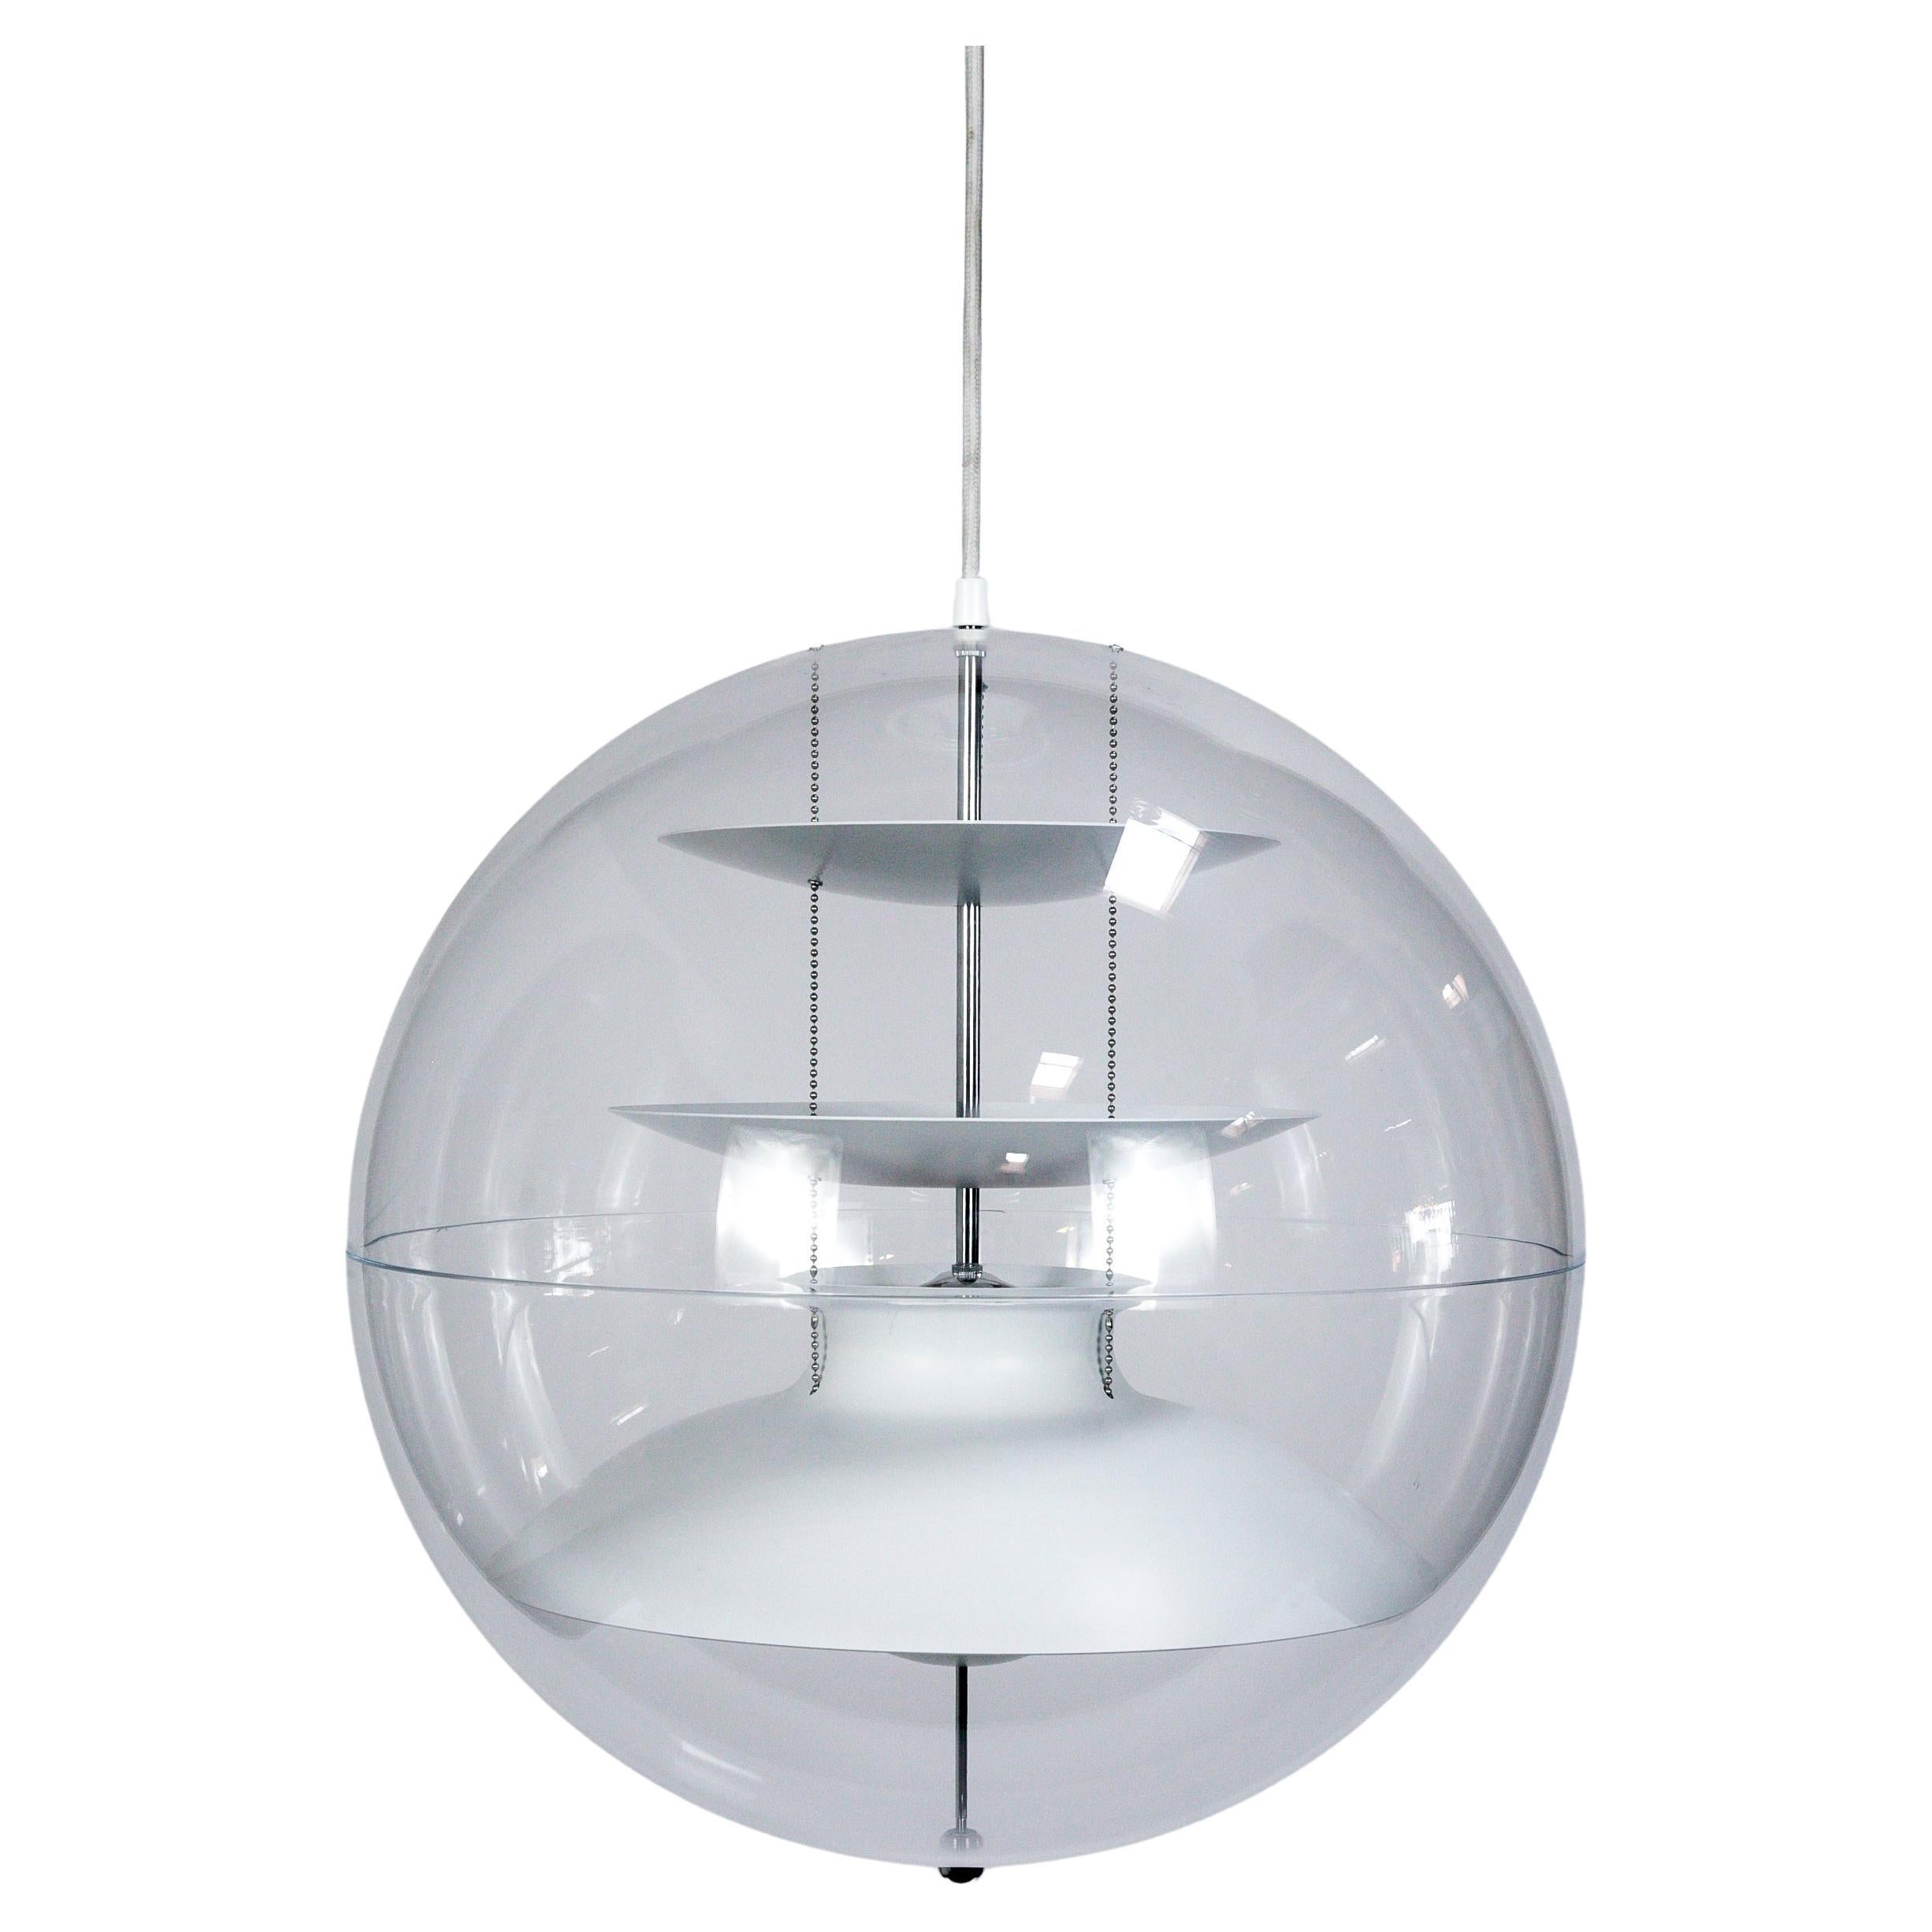 Verner Panton "Panto Lamp" Hanging Sphere Light